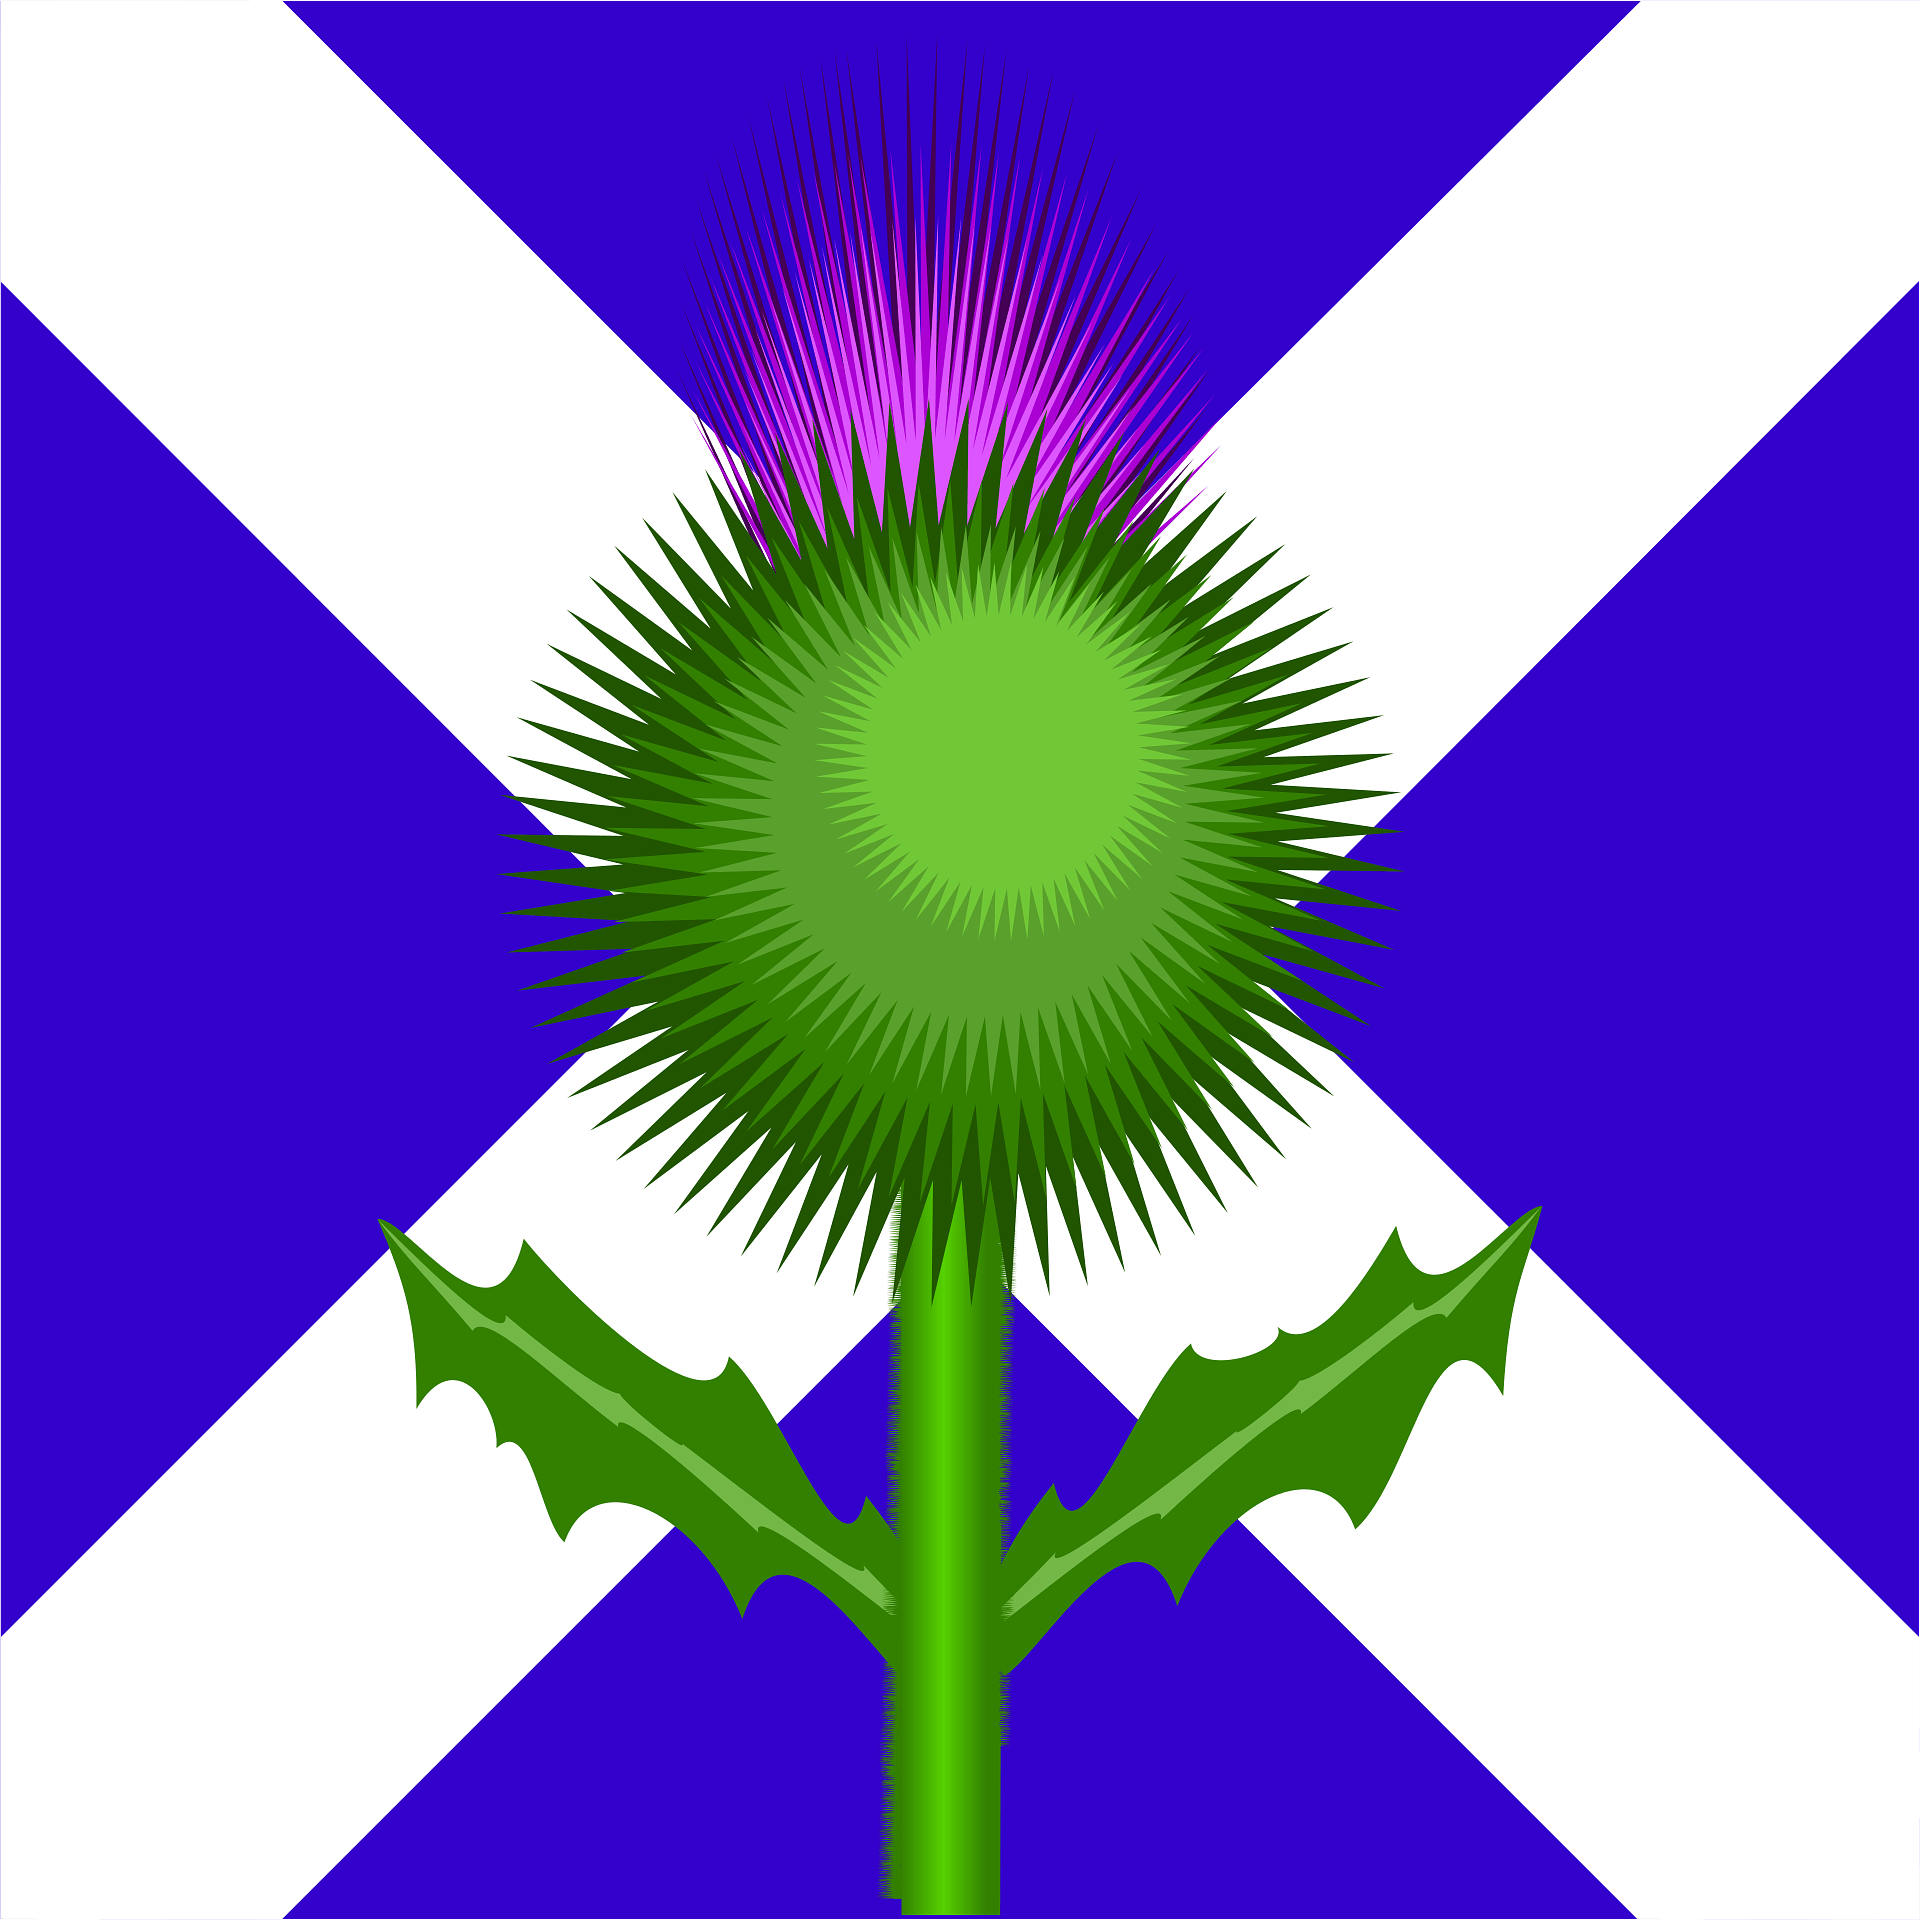 Scotland plant symbol. Чертополох символ Шотландии. Цветок чертополоха символ Шотландии. Шотландия флаг с чертополохом. Чертополох растение Шотландии.